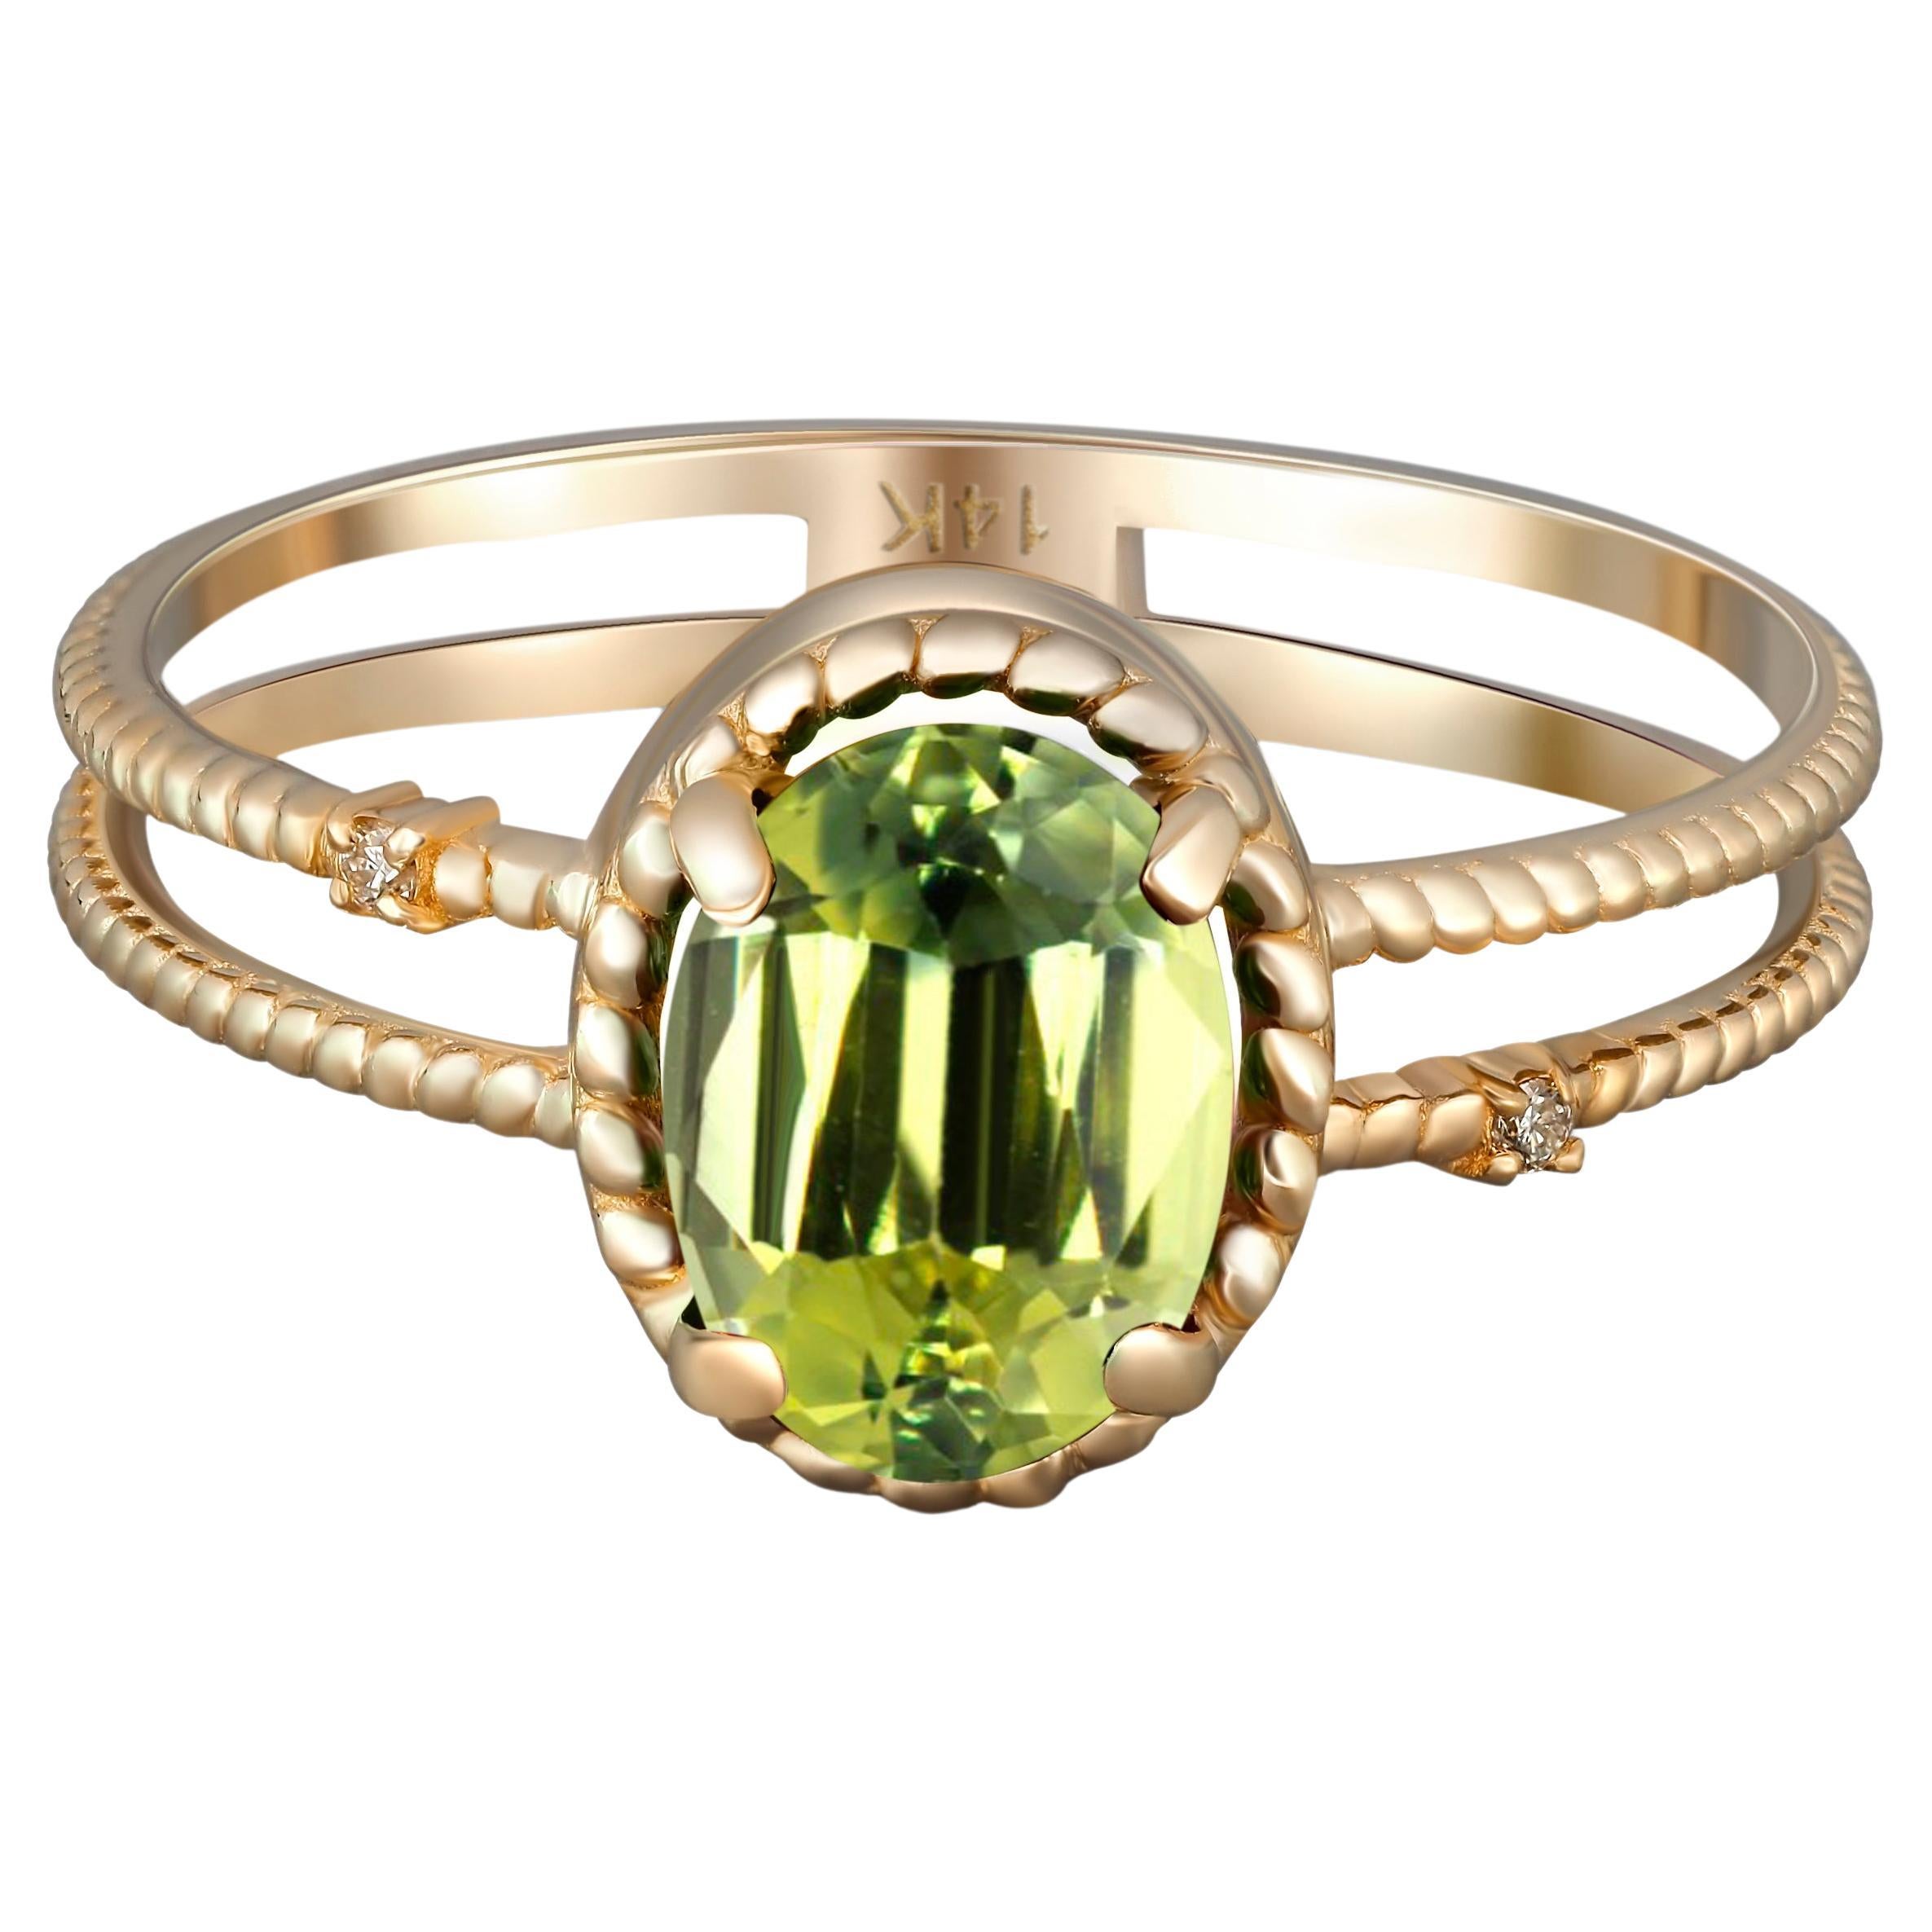 For Sale:  Oval Peridot Ring, 14k Gold Ring with Peridot, Minimalist Peridot Ring